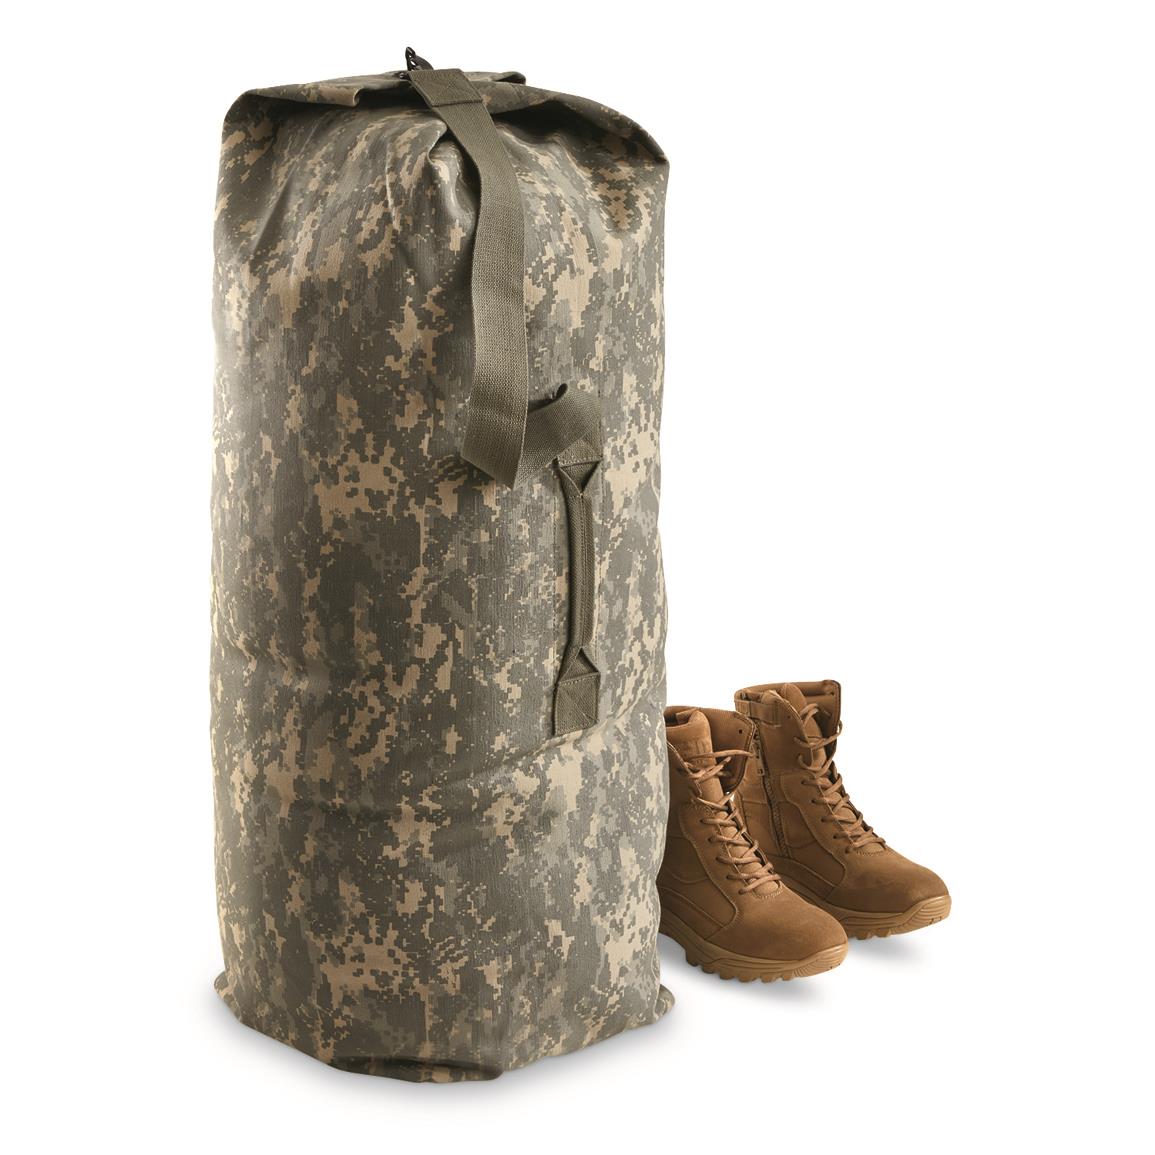 U.S. Military Canvas Duffel Bag, Reproduction - 706015, Military & Camo Duffle Bags at Sportsman ...